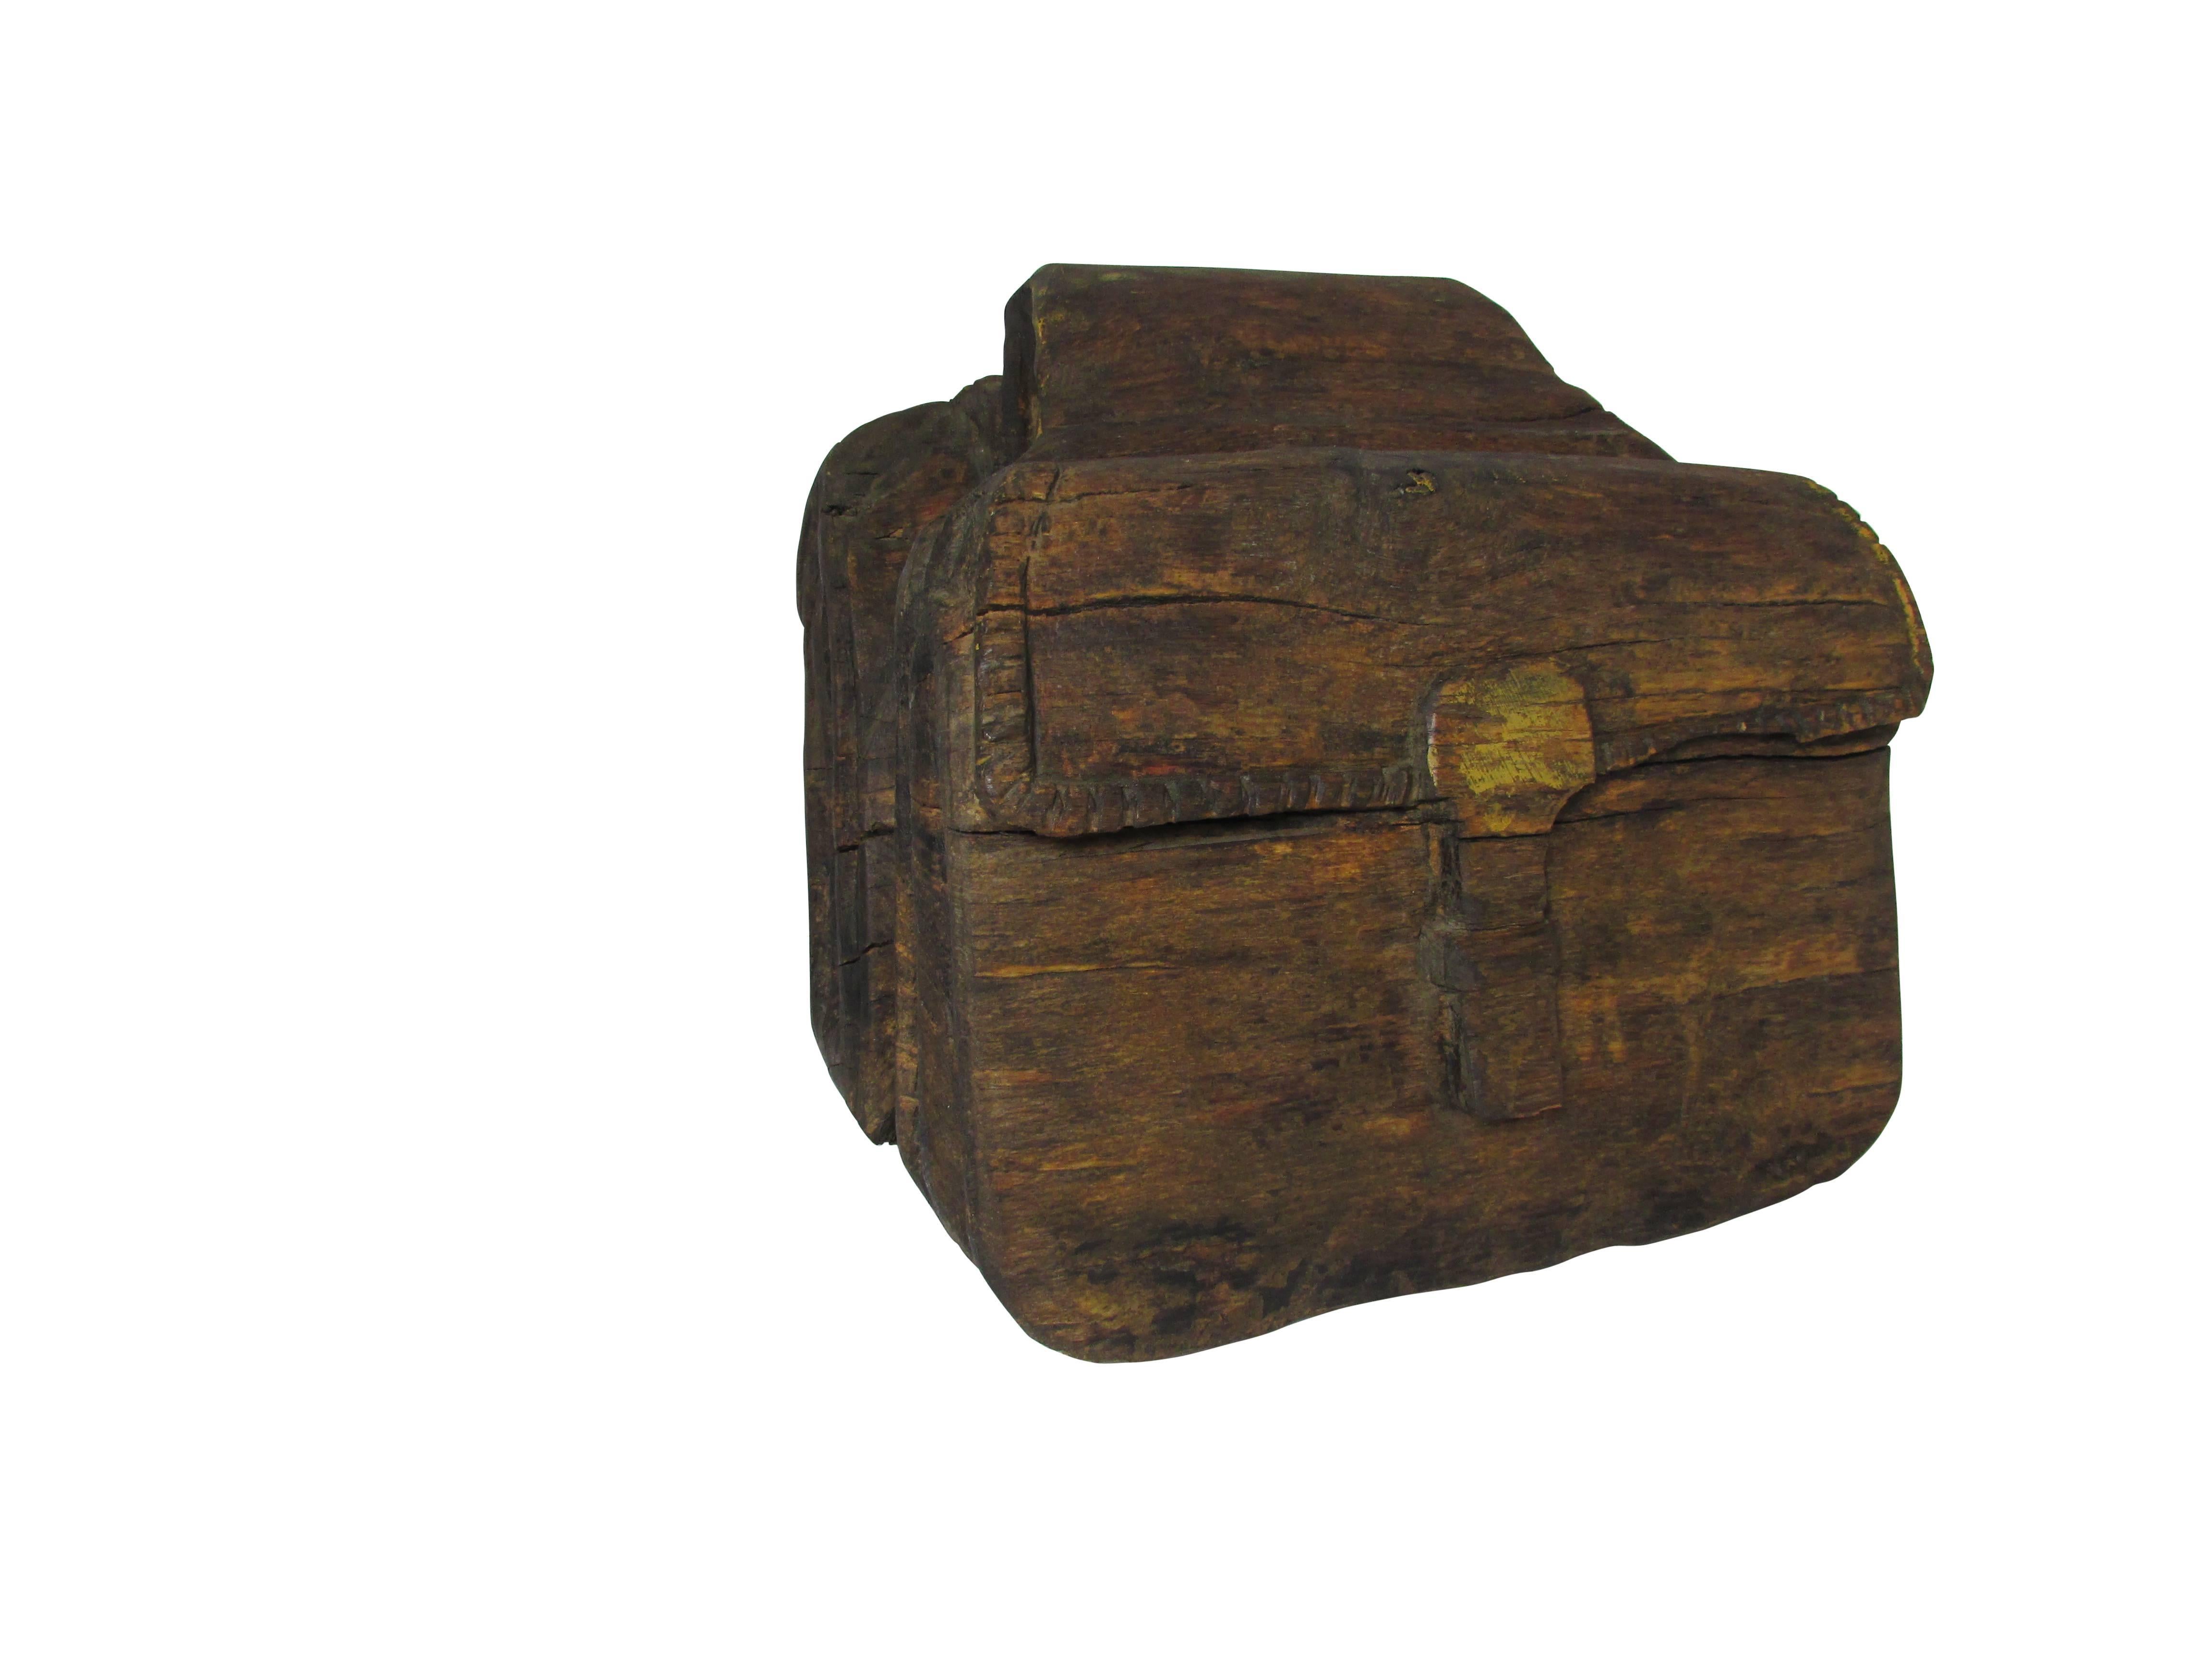 “Ol’ Saddle Bags” hand-carved Folk Art saddle bag sculpture from Oklahoma signed “R. Soloman